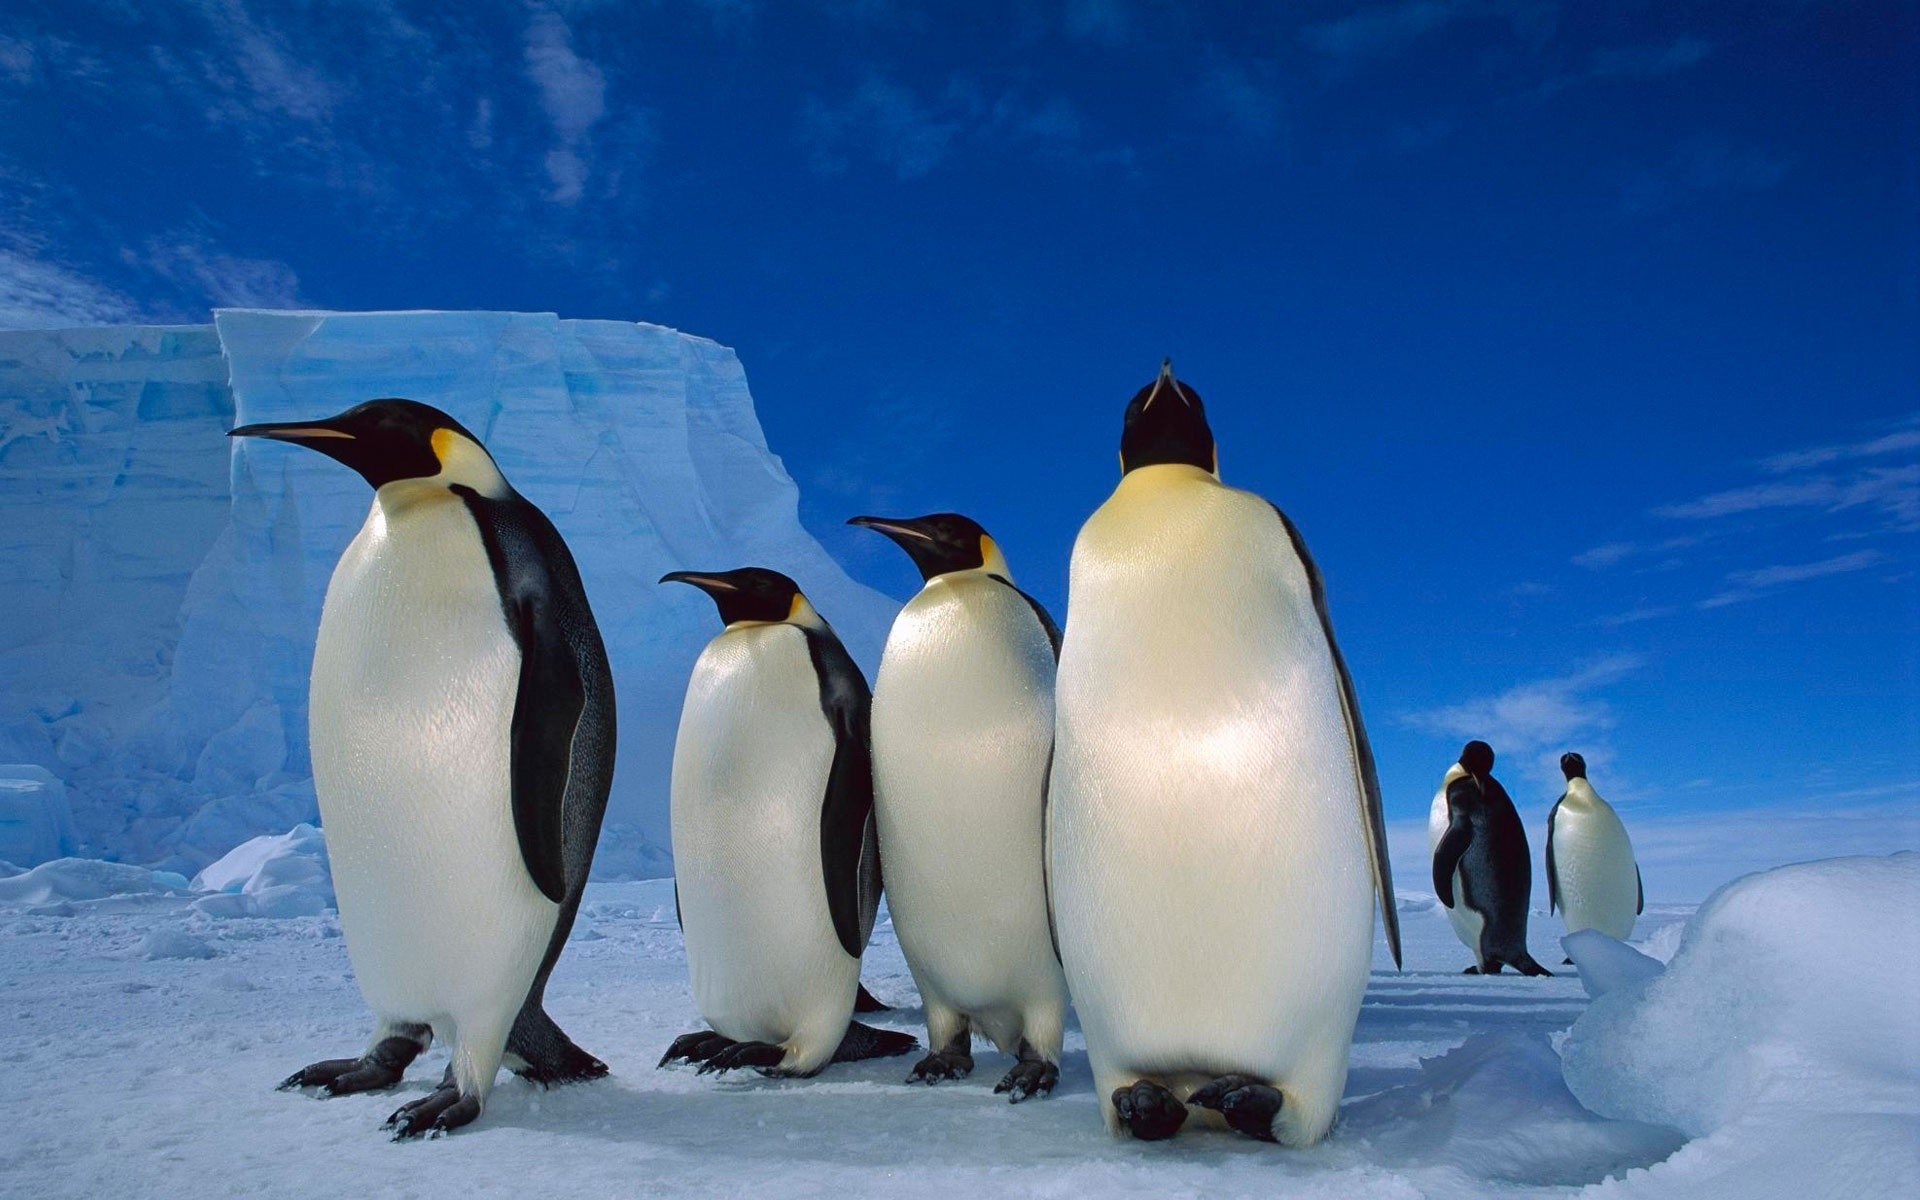 природа льдины лед Антарктида море пингвины животные камни берег без смс